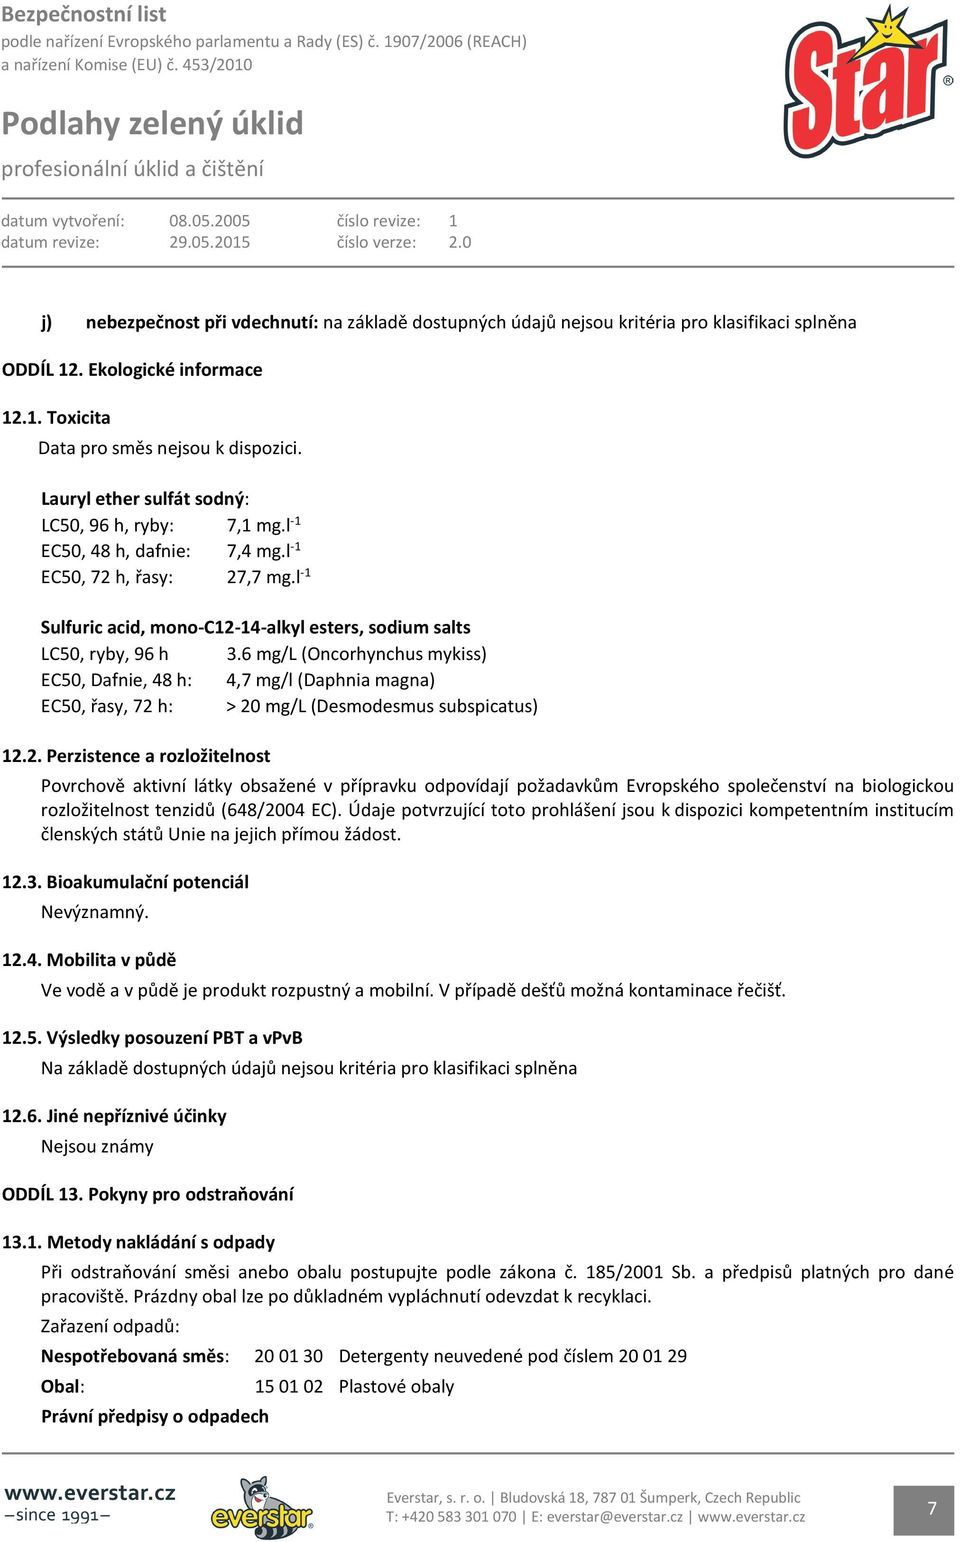 6 mg/l (Oncorhynchus mykiss) EC50, Dafnie, 48 h: 4,7 mg/l (Daphnia magna) EC50, řasy, 72 